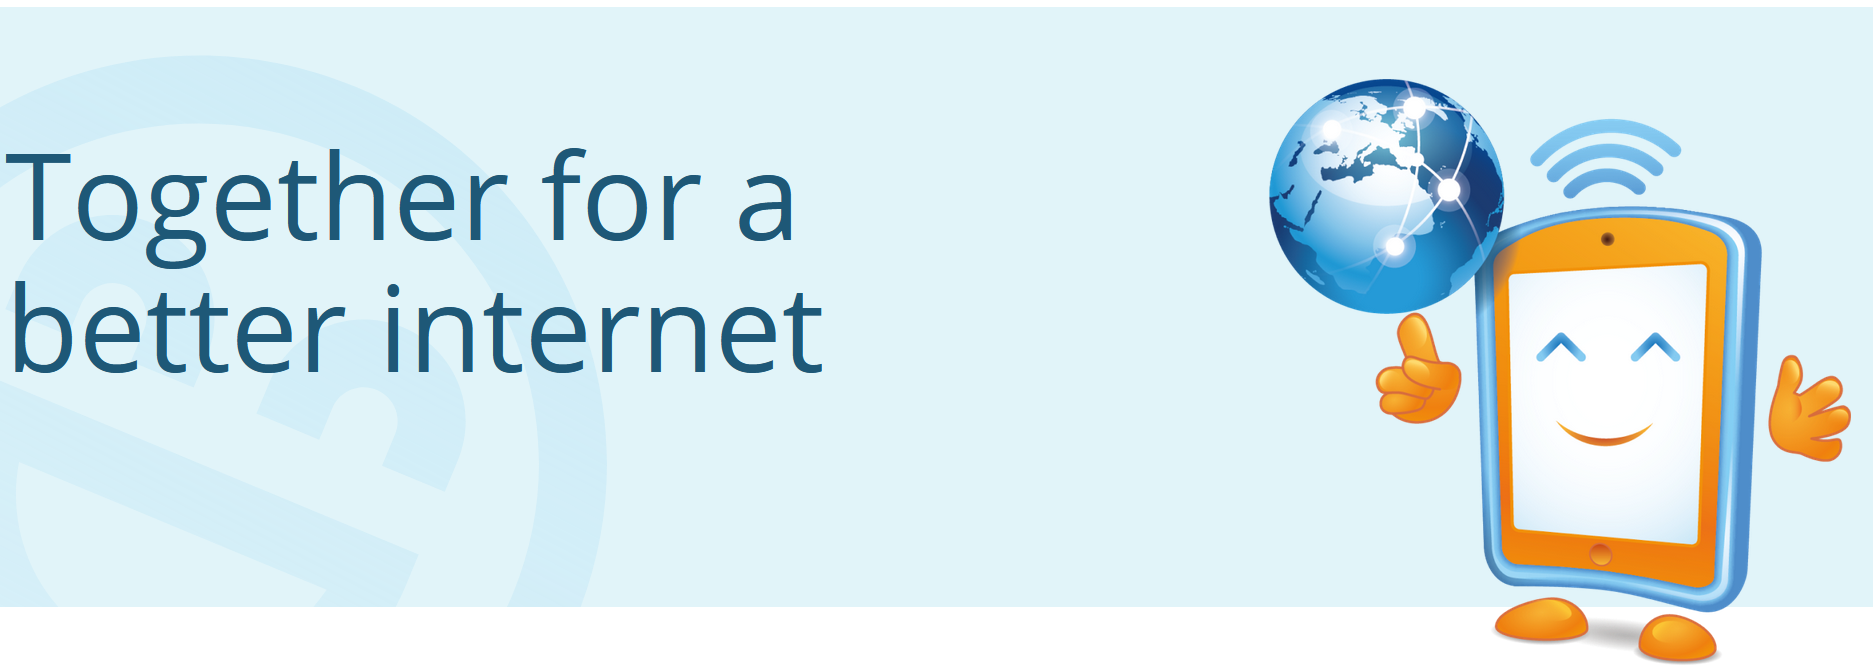 Together for a better internet .PNG